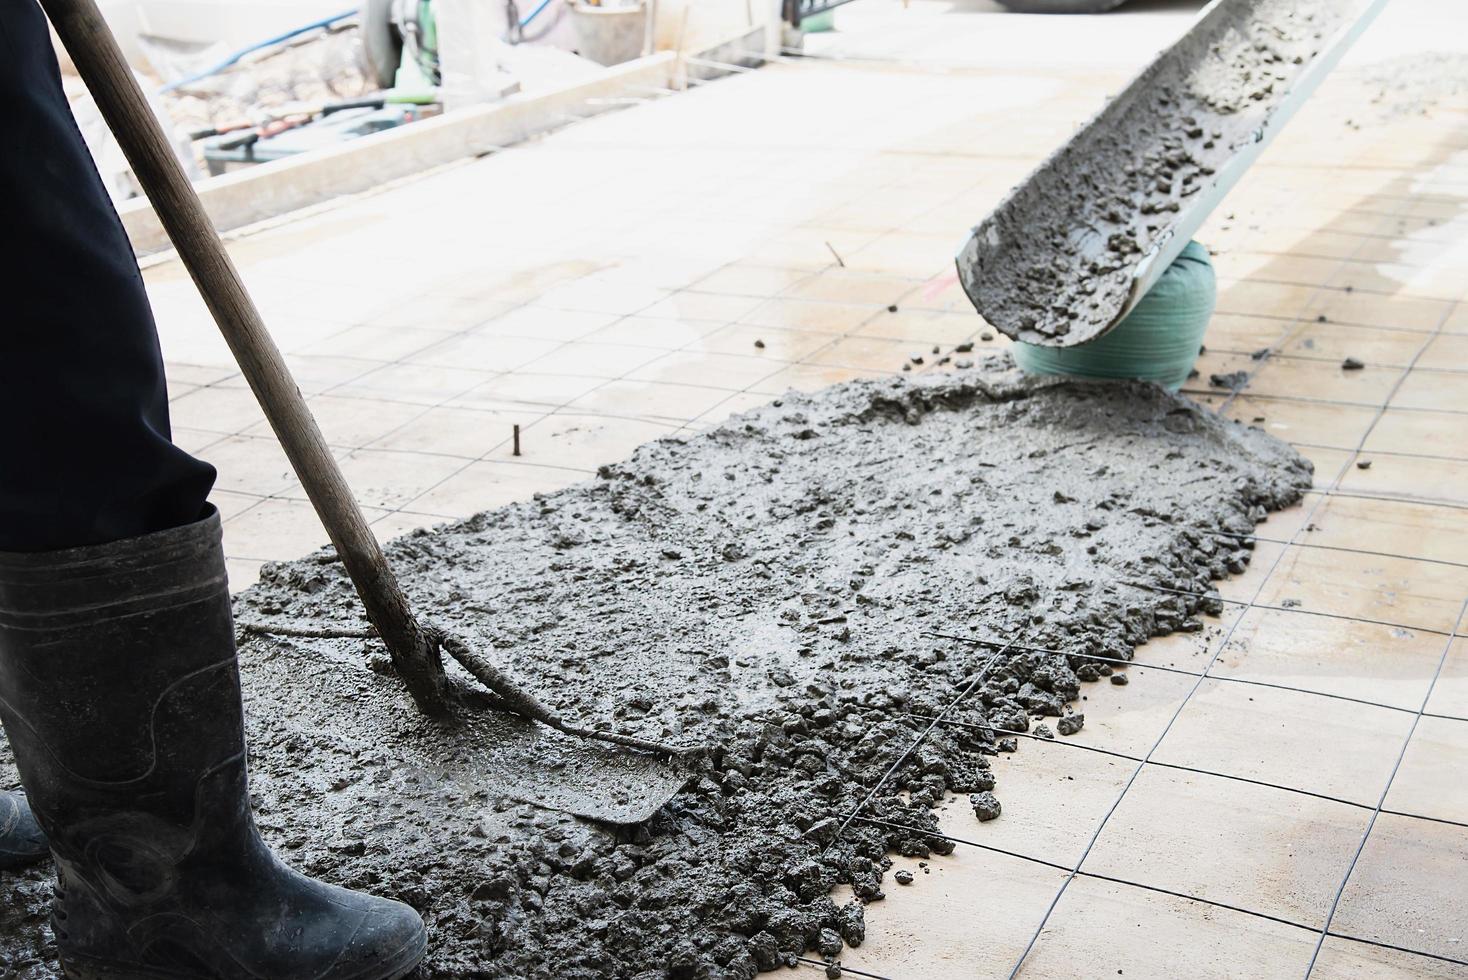 Workman doing floor concrete pouring job in construction site photo